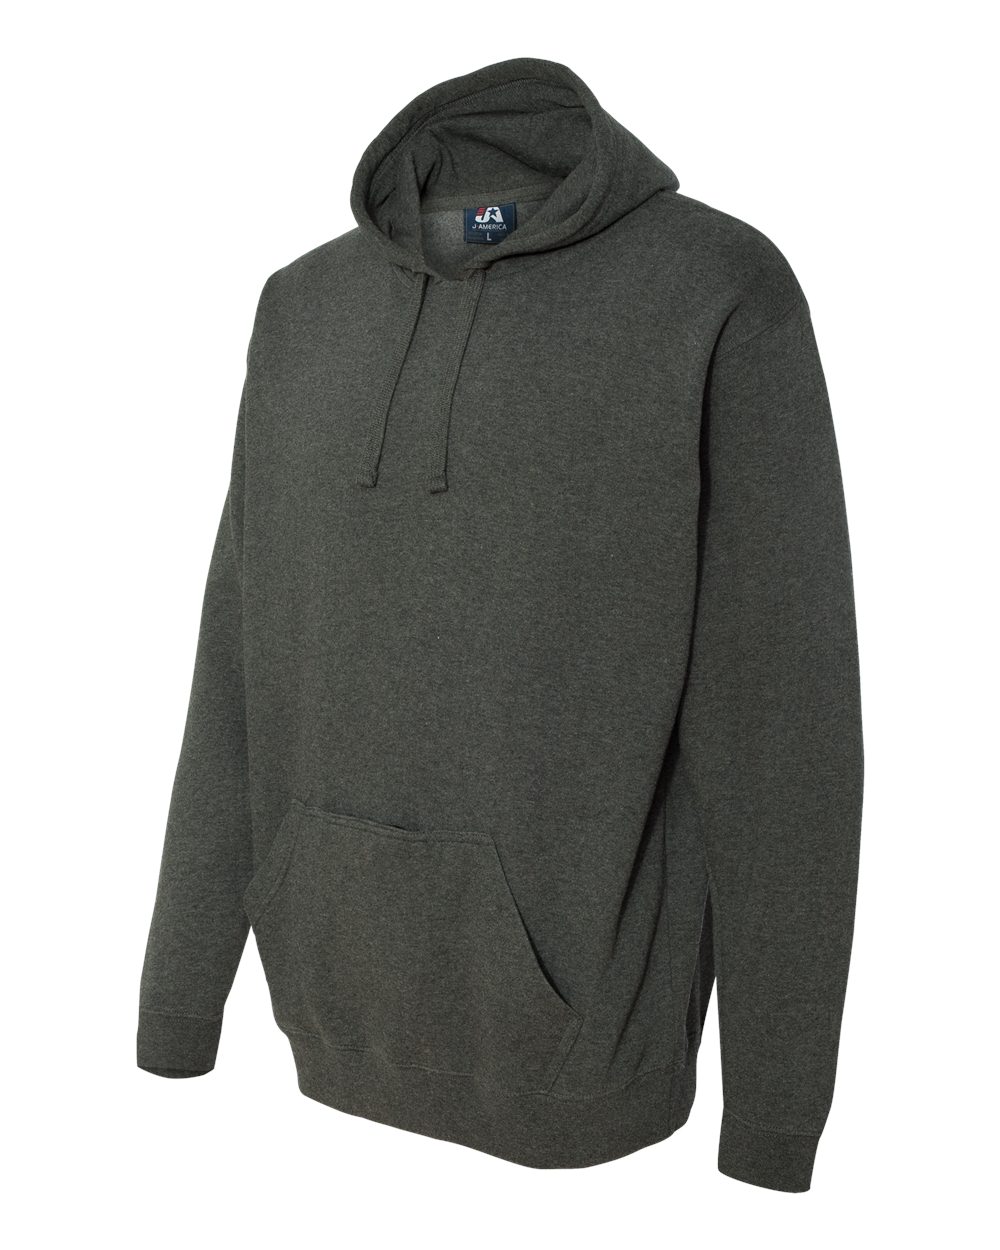 J. America Tailgate Hooded Sweatshirt - 8815